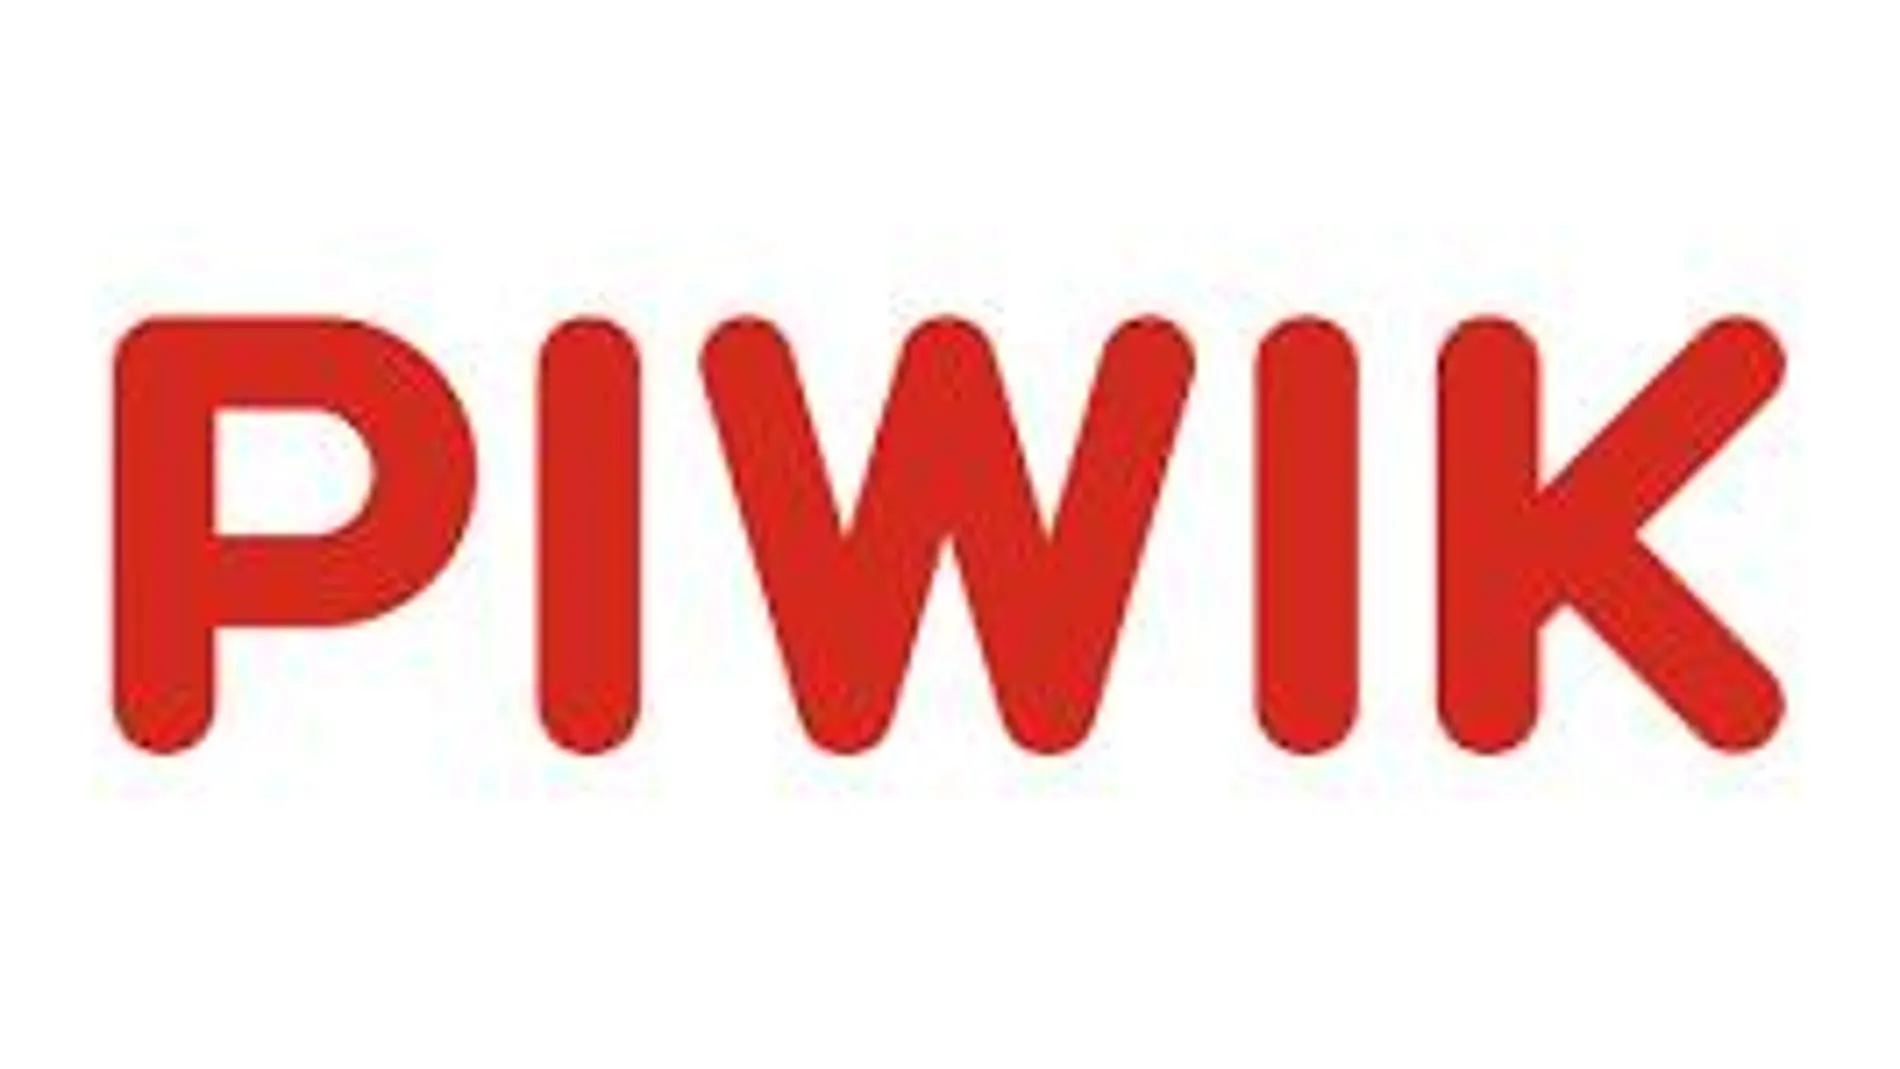 Testando herramientas de marketing digital: Piwik